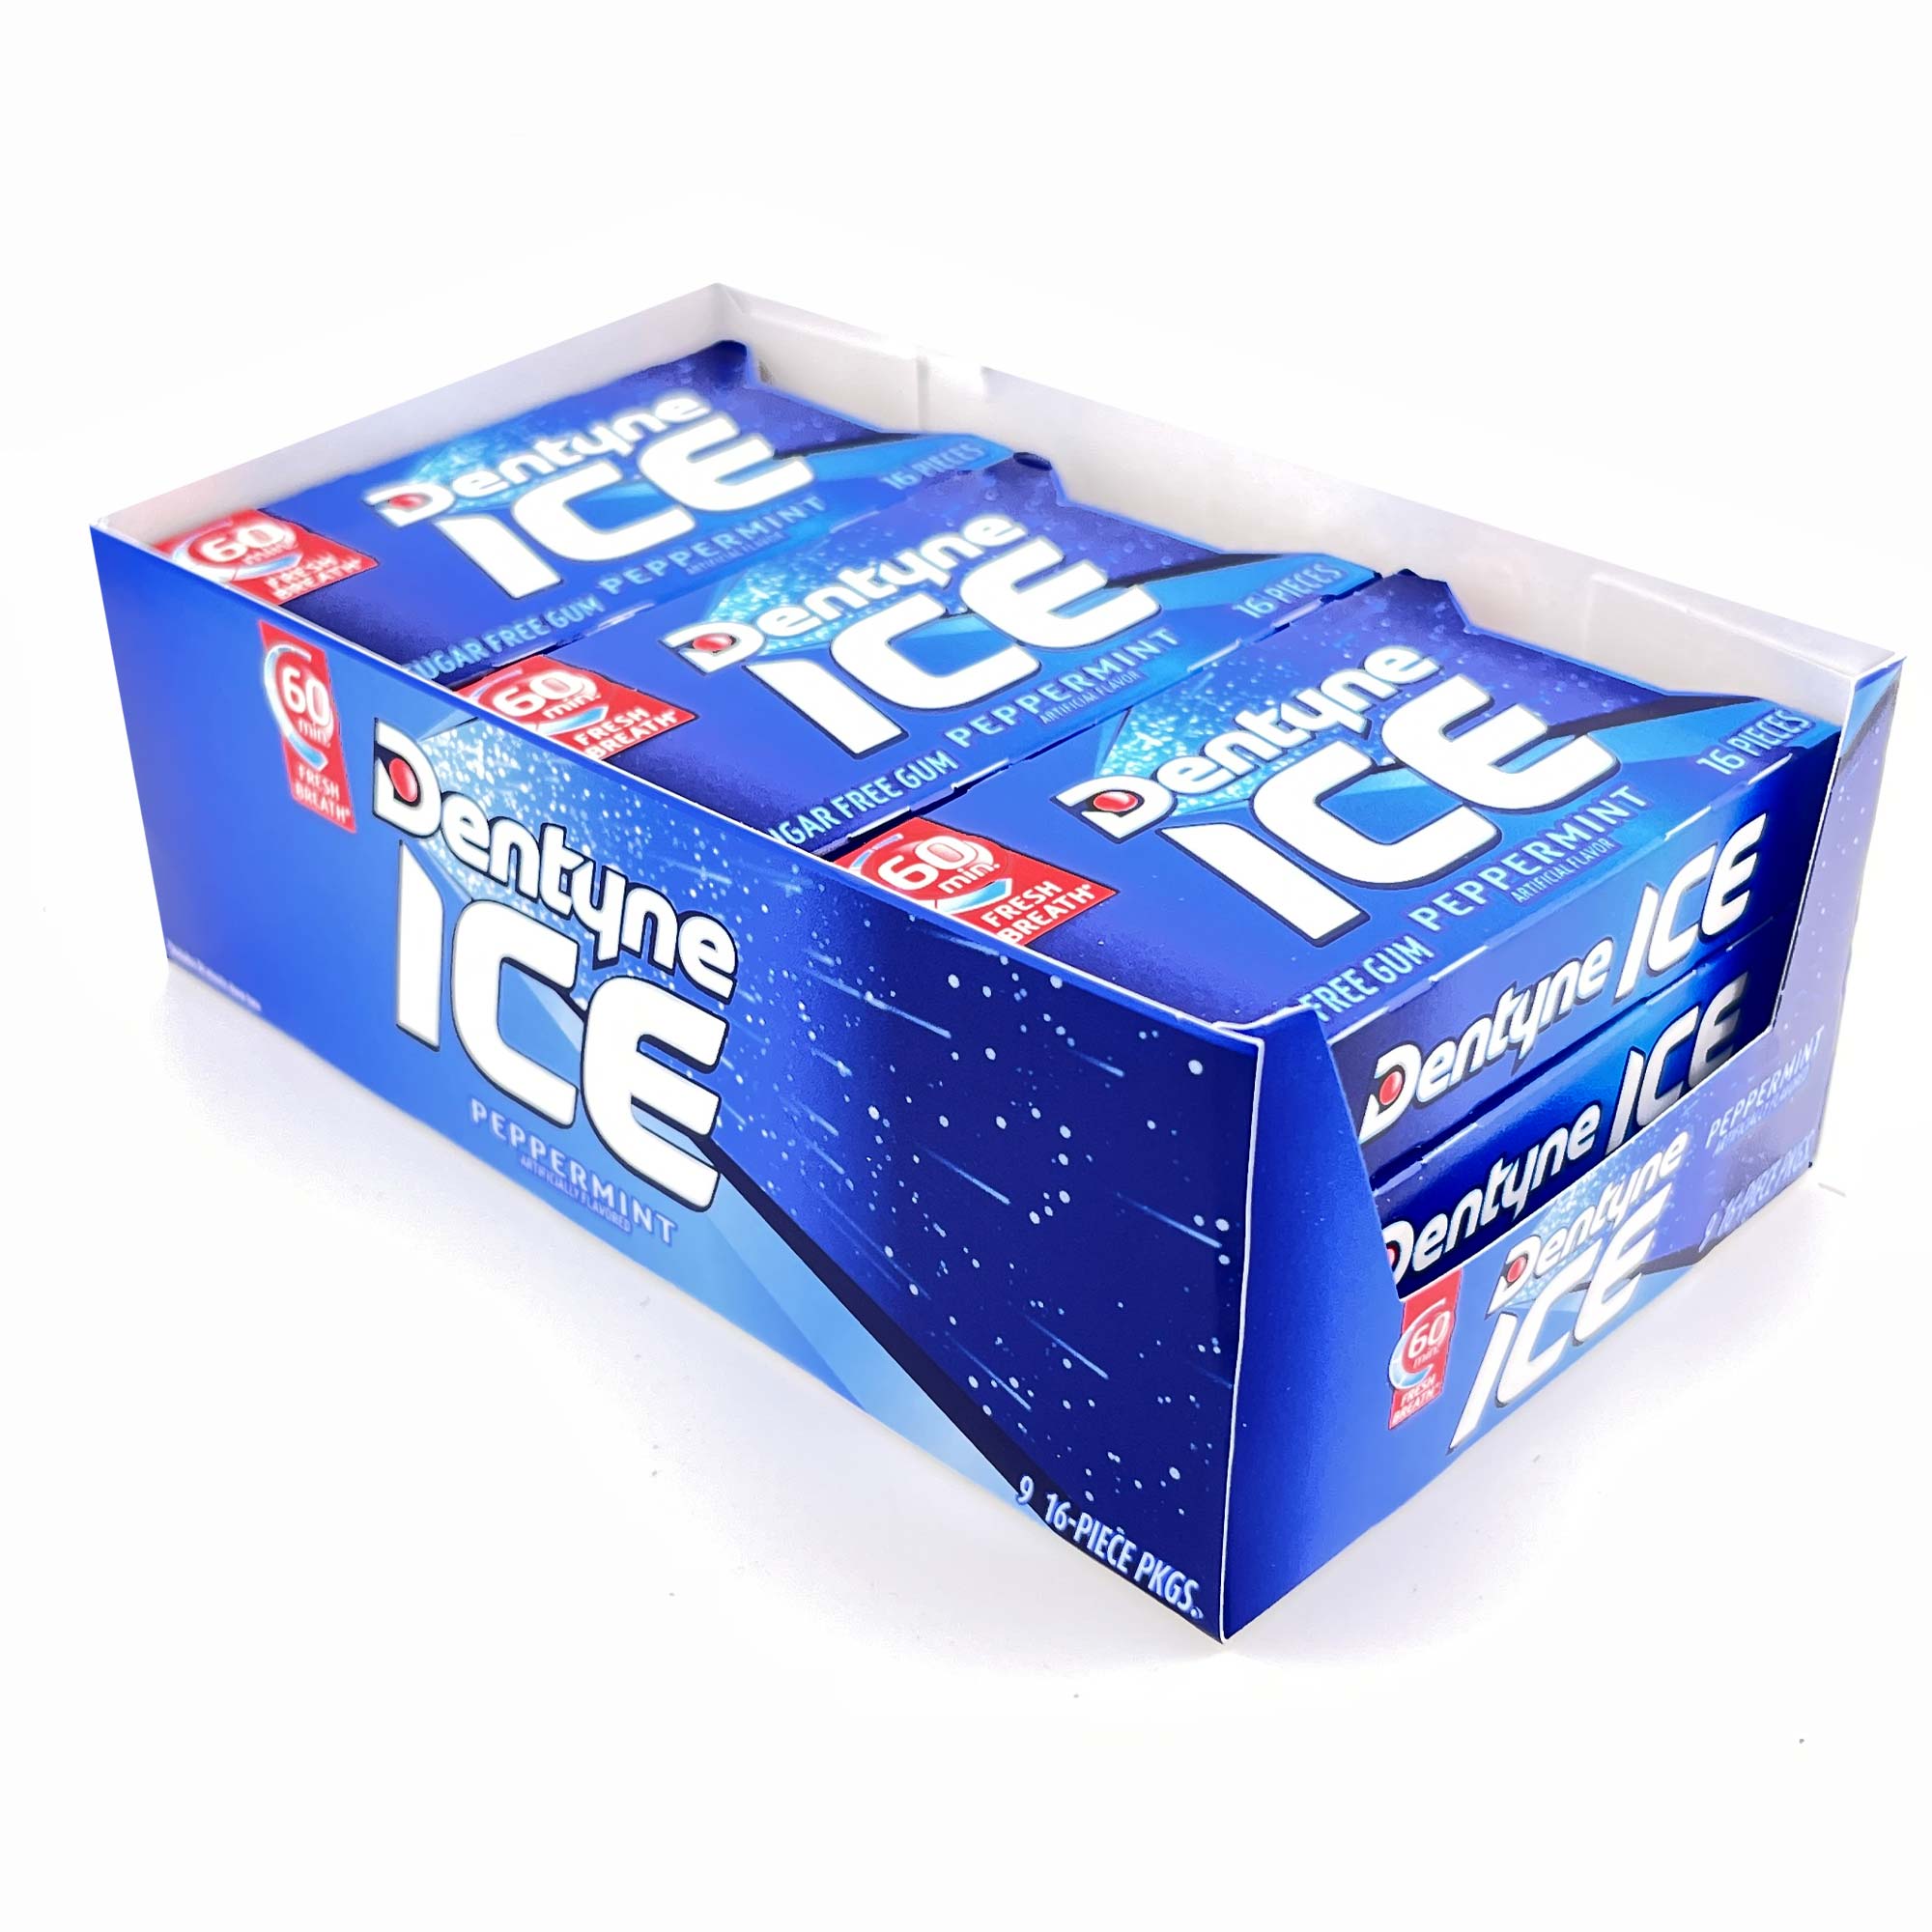 Dentyne Ice Gum - Arctic Chill - 9ct Display Box